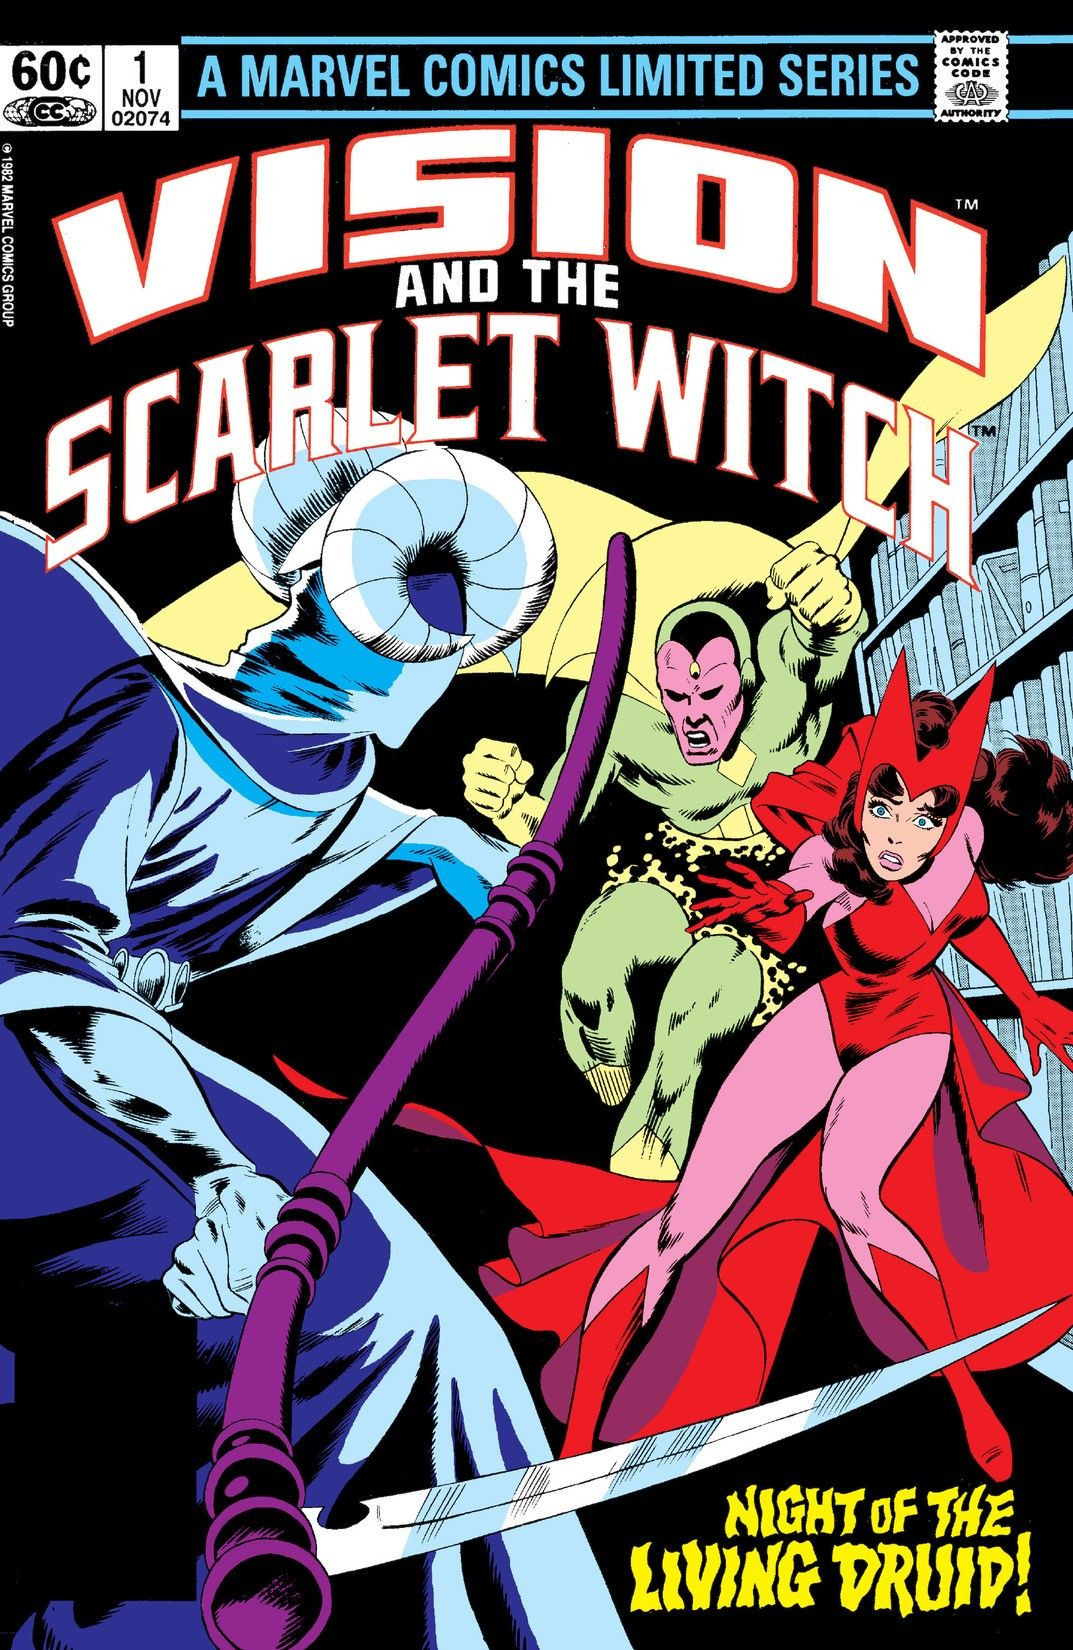 Scarlet Witch Comic Books, Marvel Database